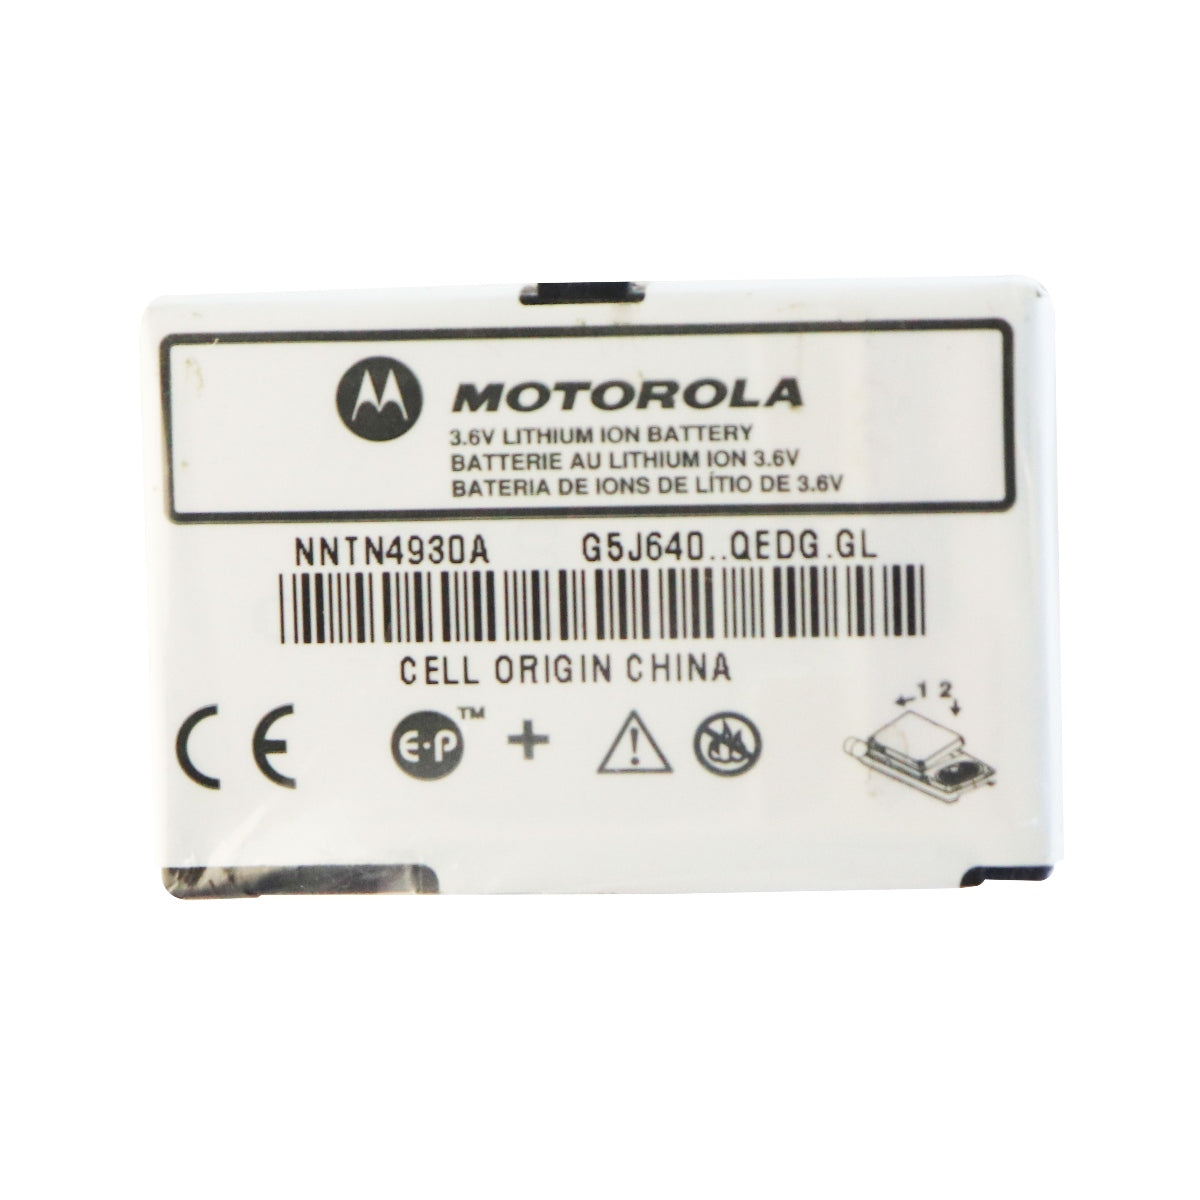 Motorola OEM 3.6V Lithium Ion Battery (NNTN4930A) for Motorola Devices - White Cell Phone - Batteries Motorola    - Simple Cell Bulk Wholesale Pricing - USA Seller